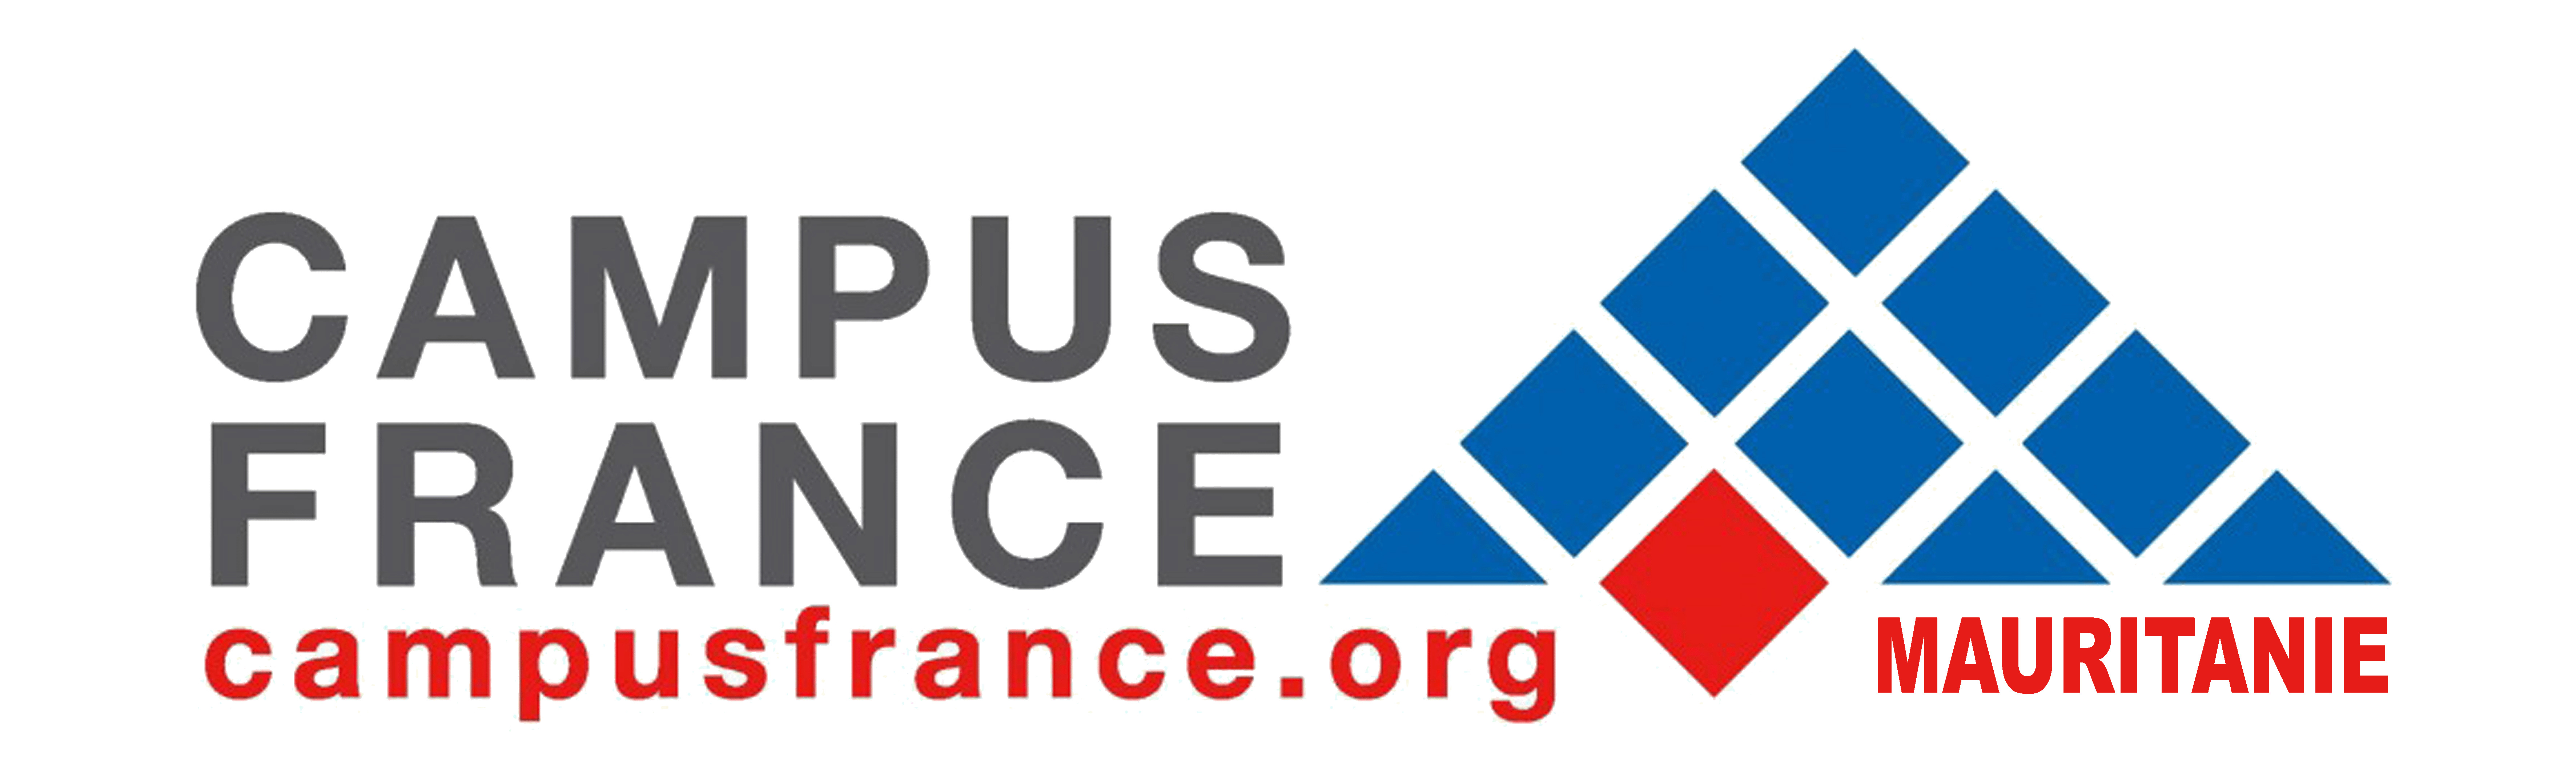 Campus France logo